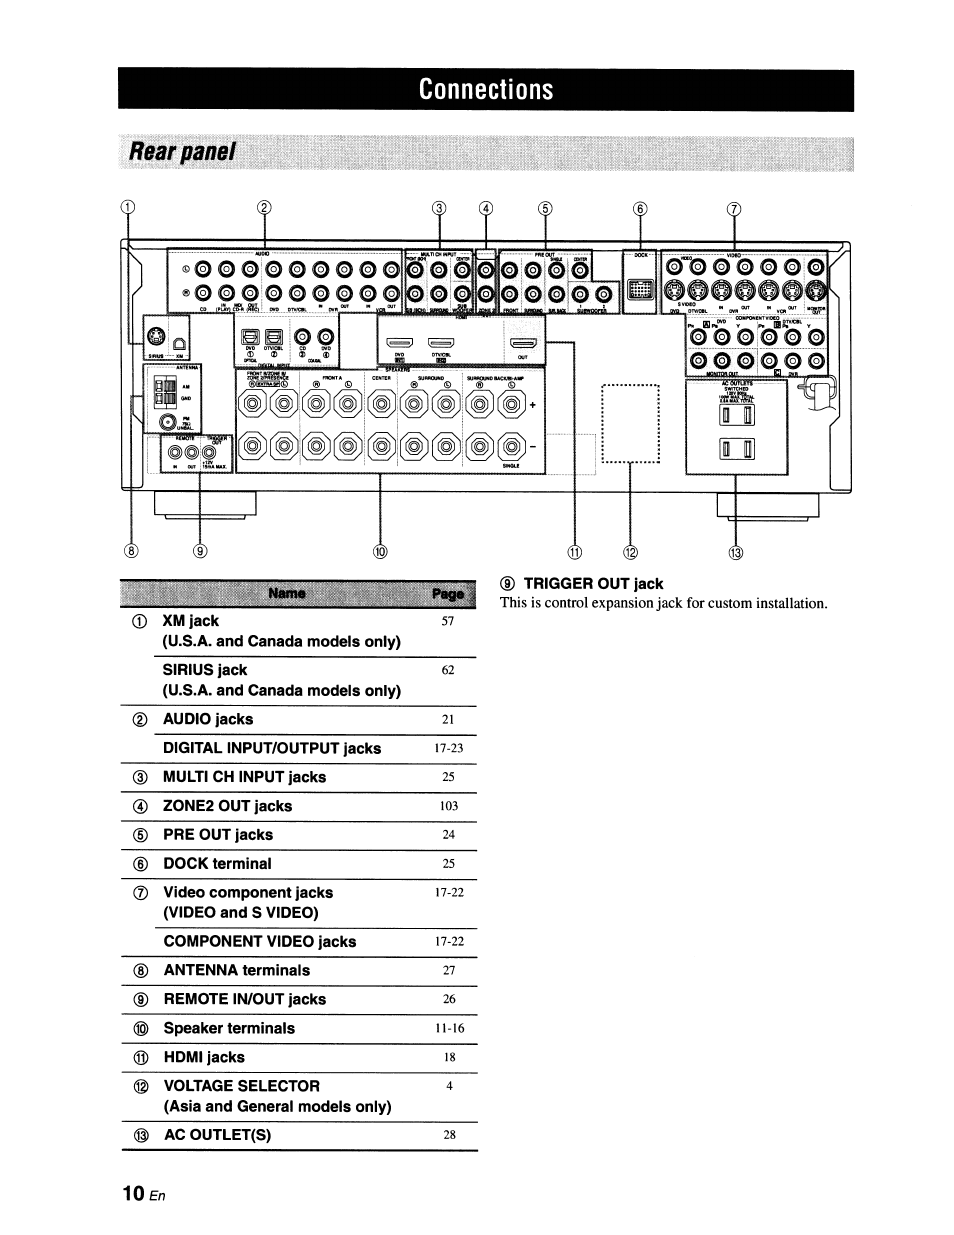 Connections, Rear pane f, 10 en | Yamaha RX-V663 User Manual | Page 14 / 151